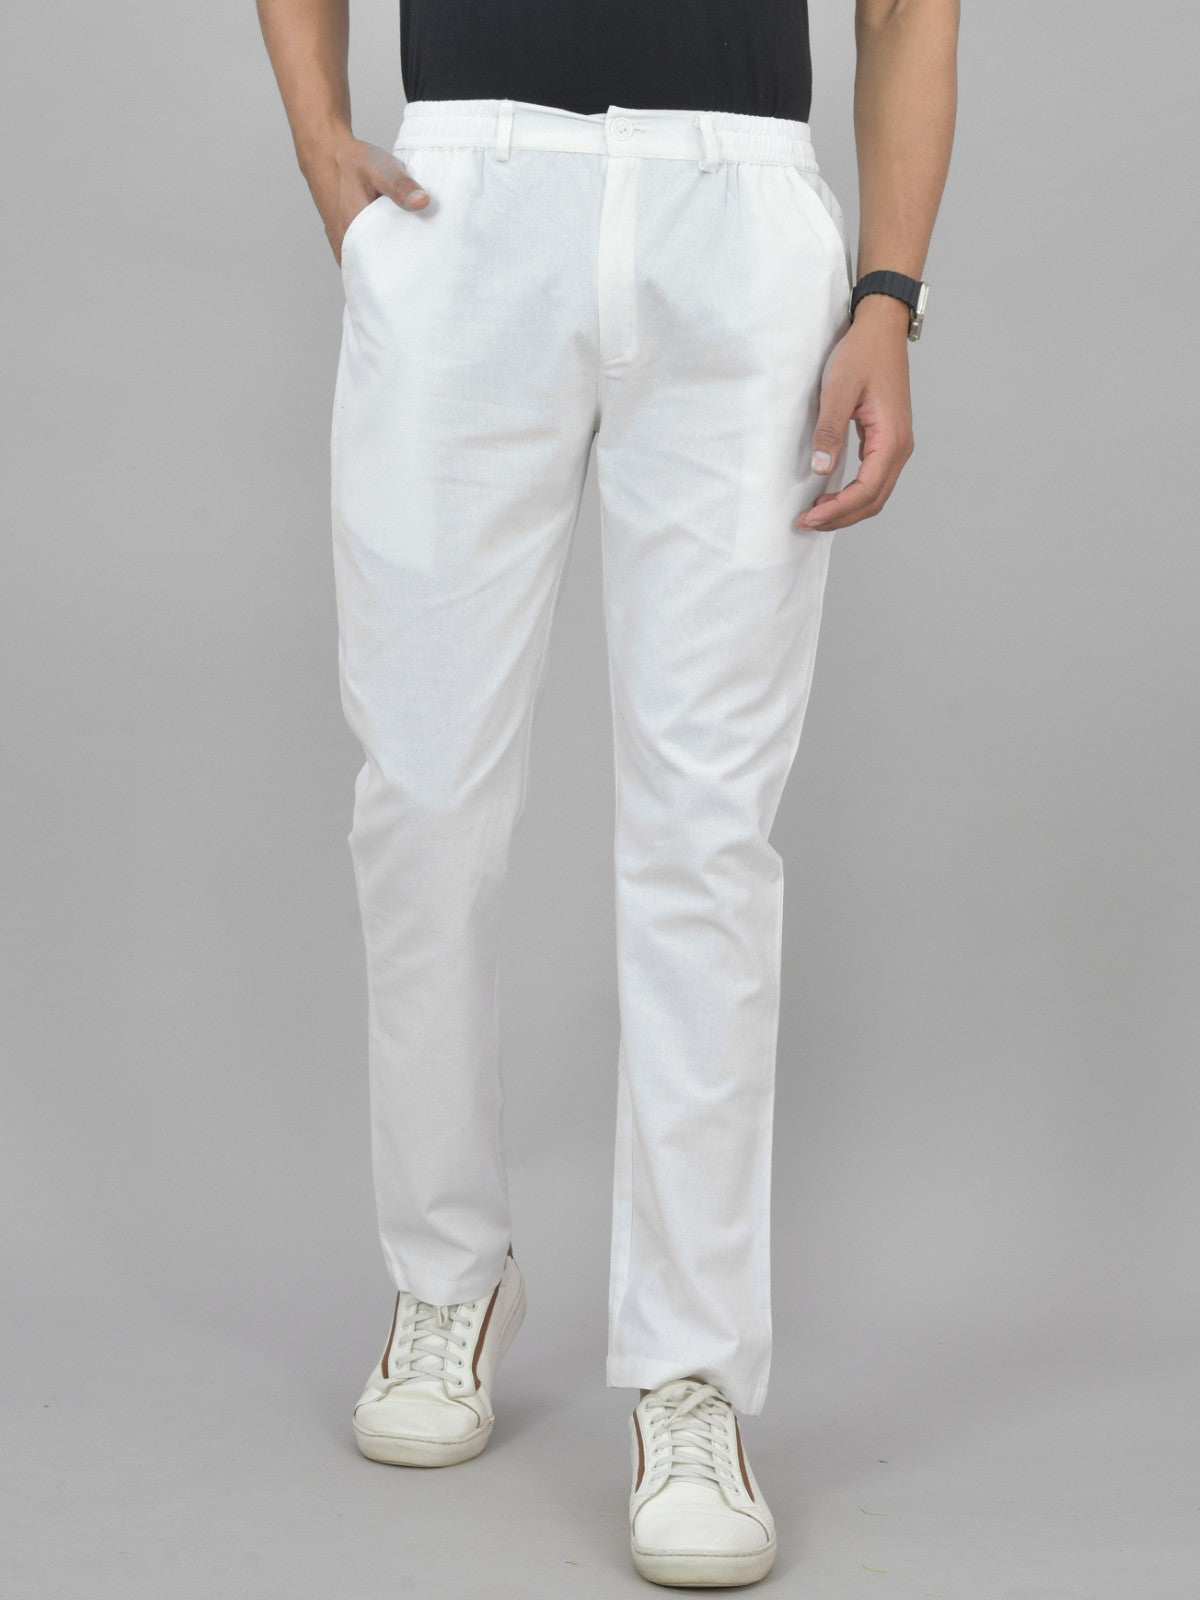 White Airy linen  Summer Cool Cotton Comfort Pants For Men